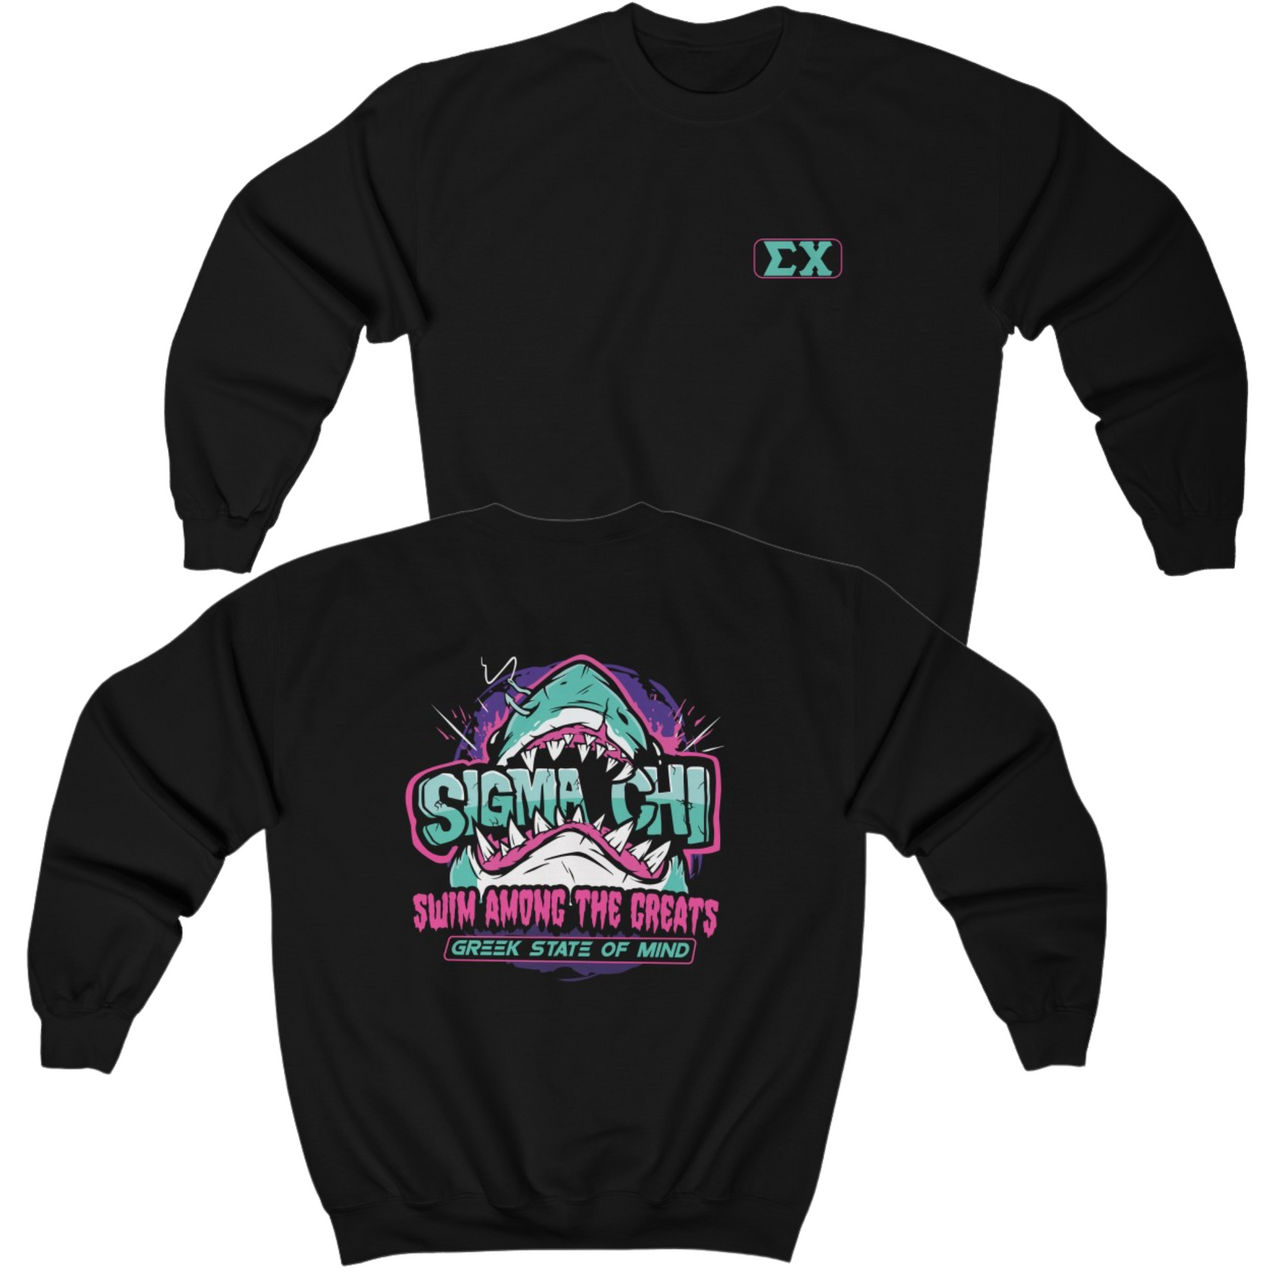 Black Sigma Chi Graphic Crewneck Sweatshirt | The Deep End | Sigma Chi Fraternity Merch House